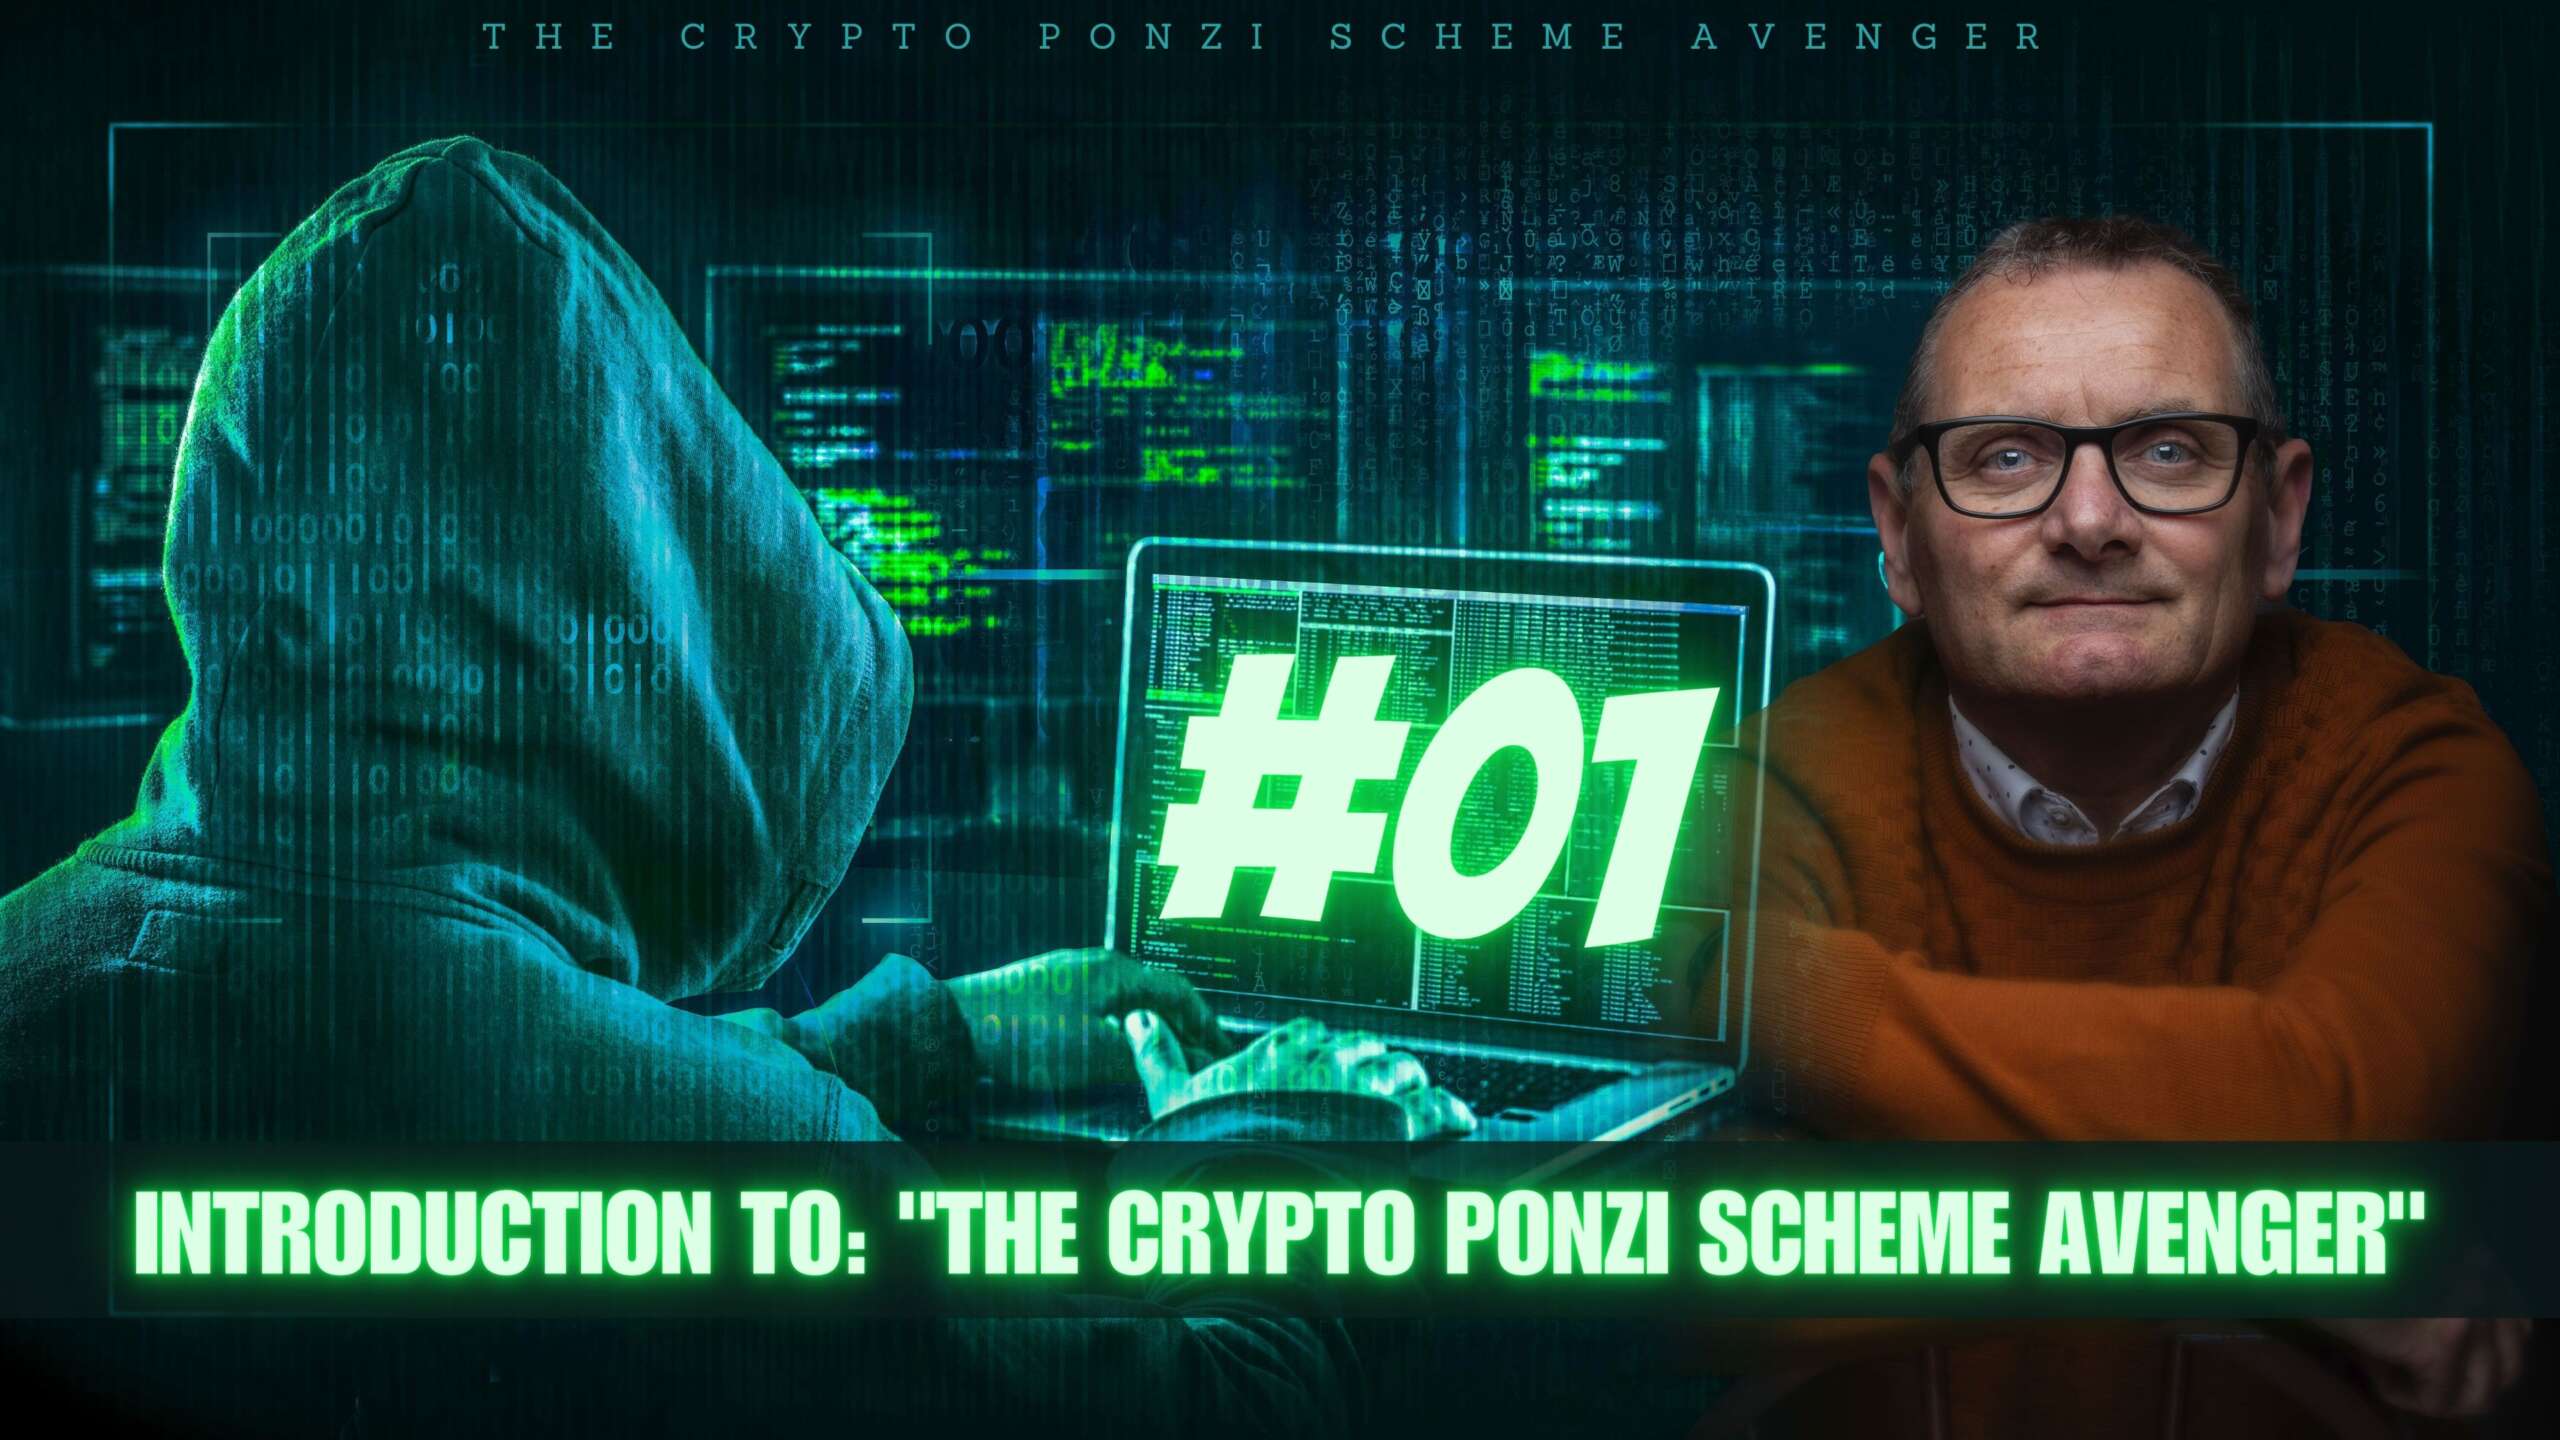 The Crypto Ponzi Scheme Avenger